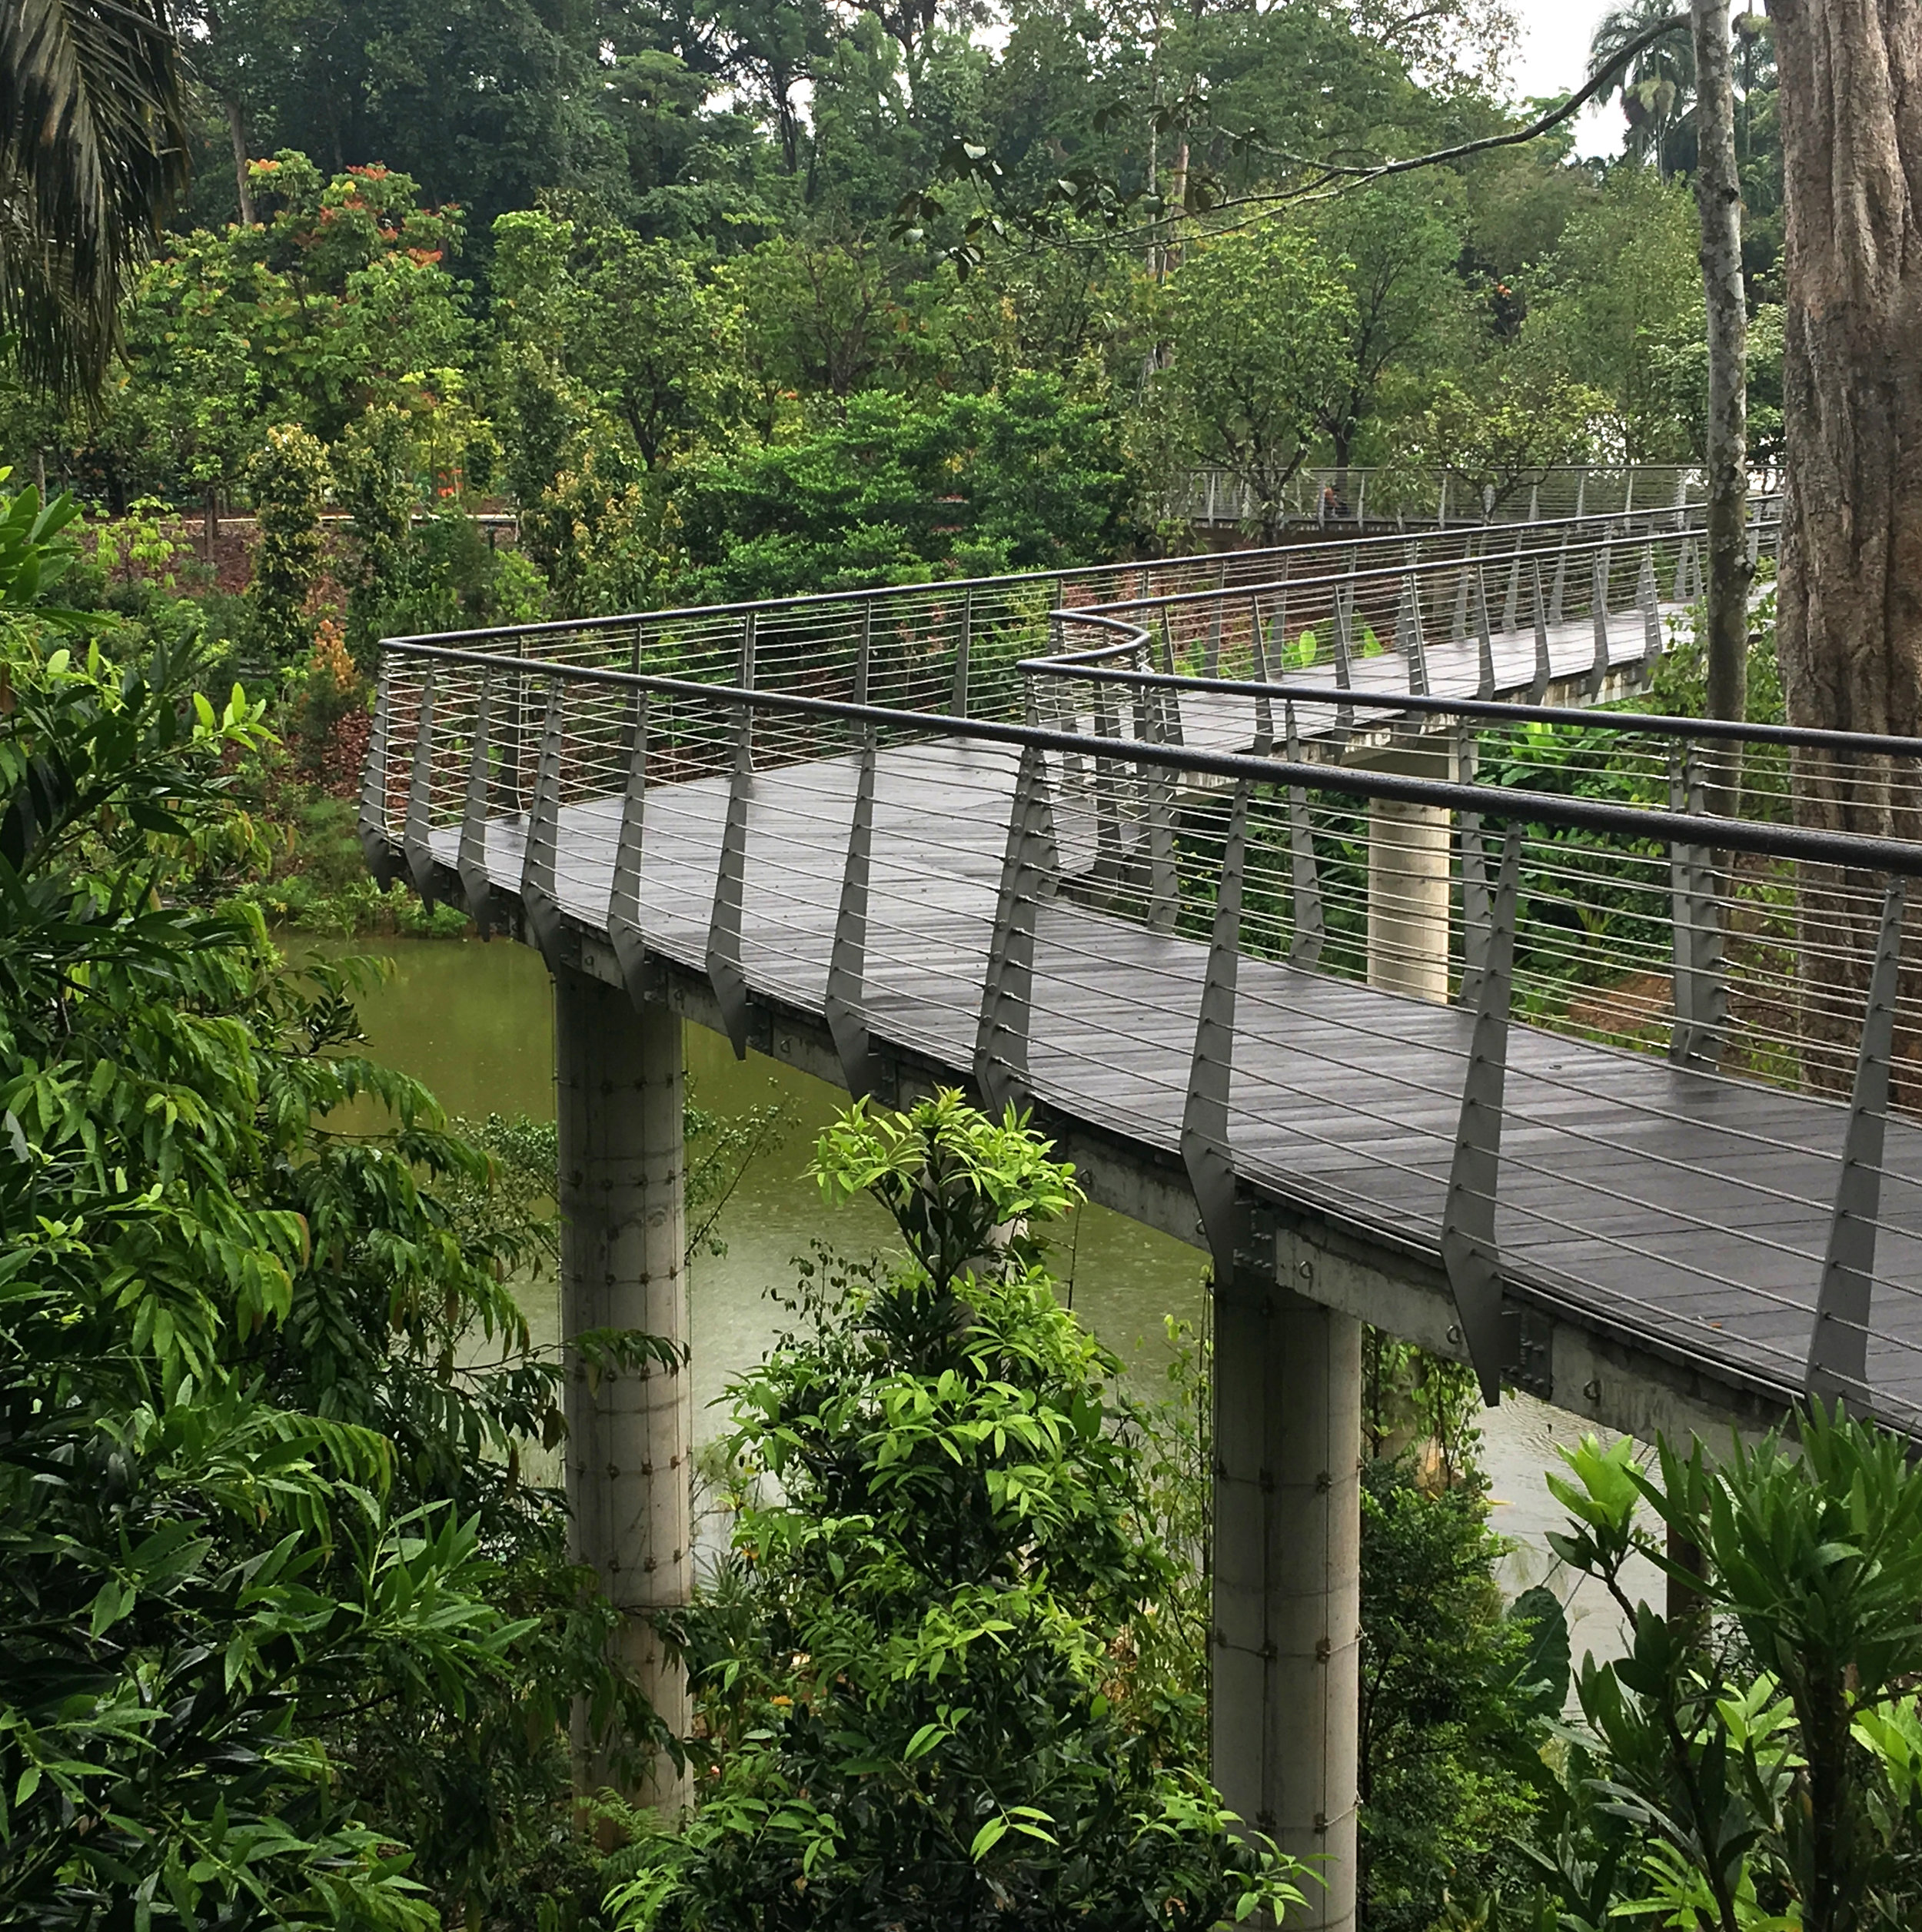 HIgh level walkway over wetlands